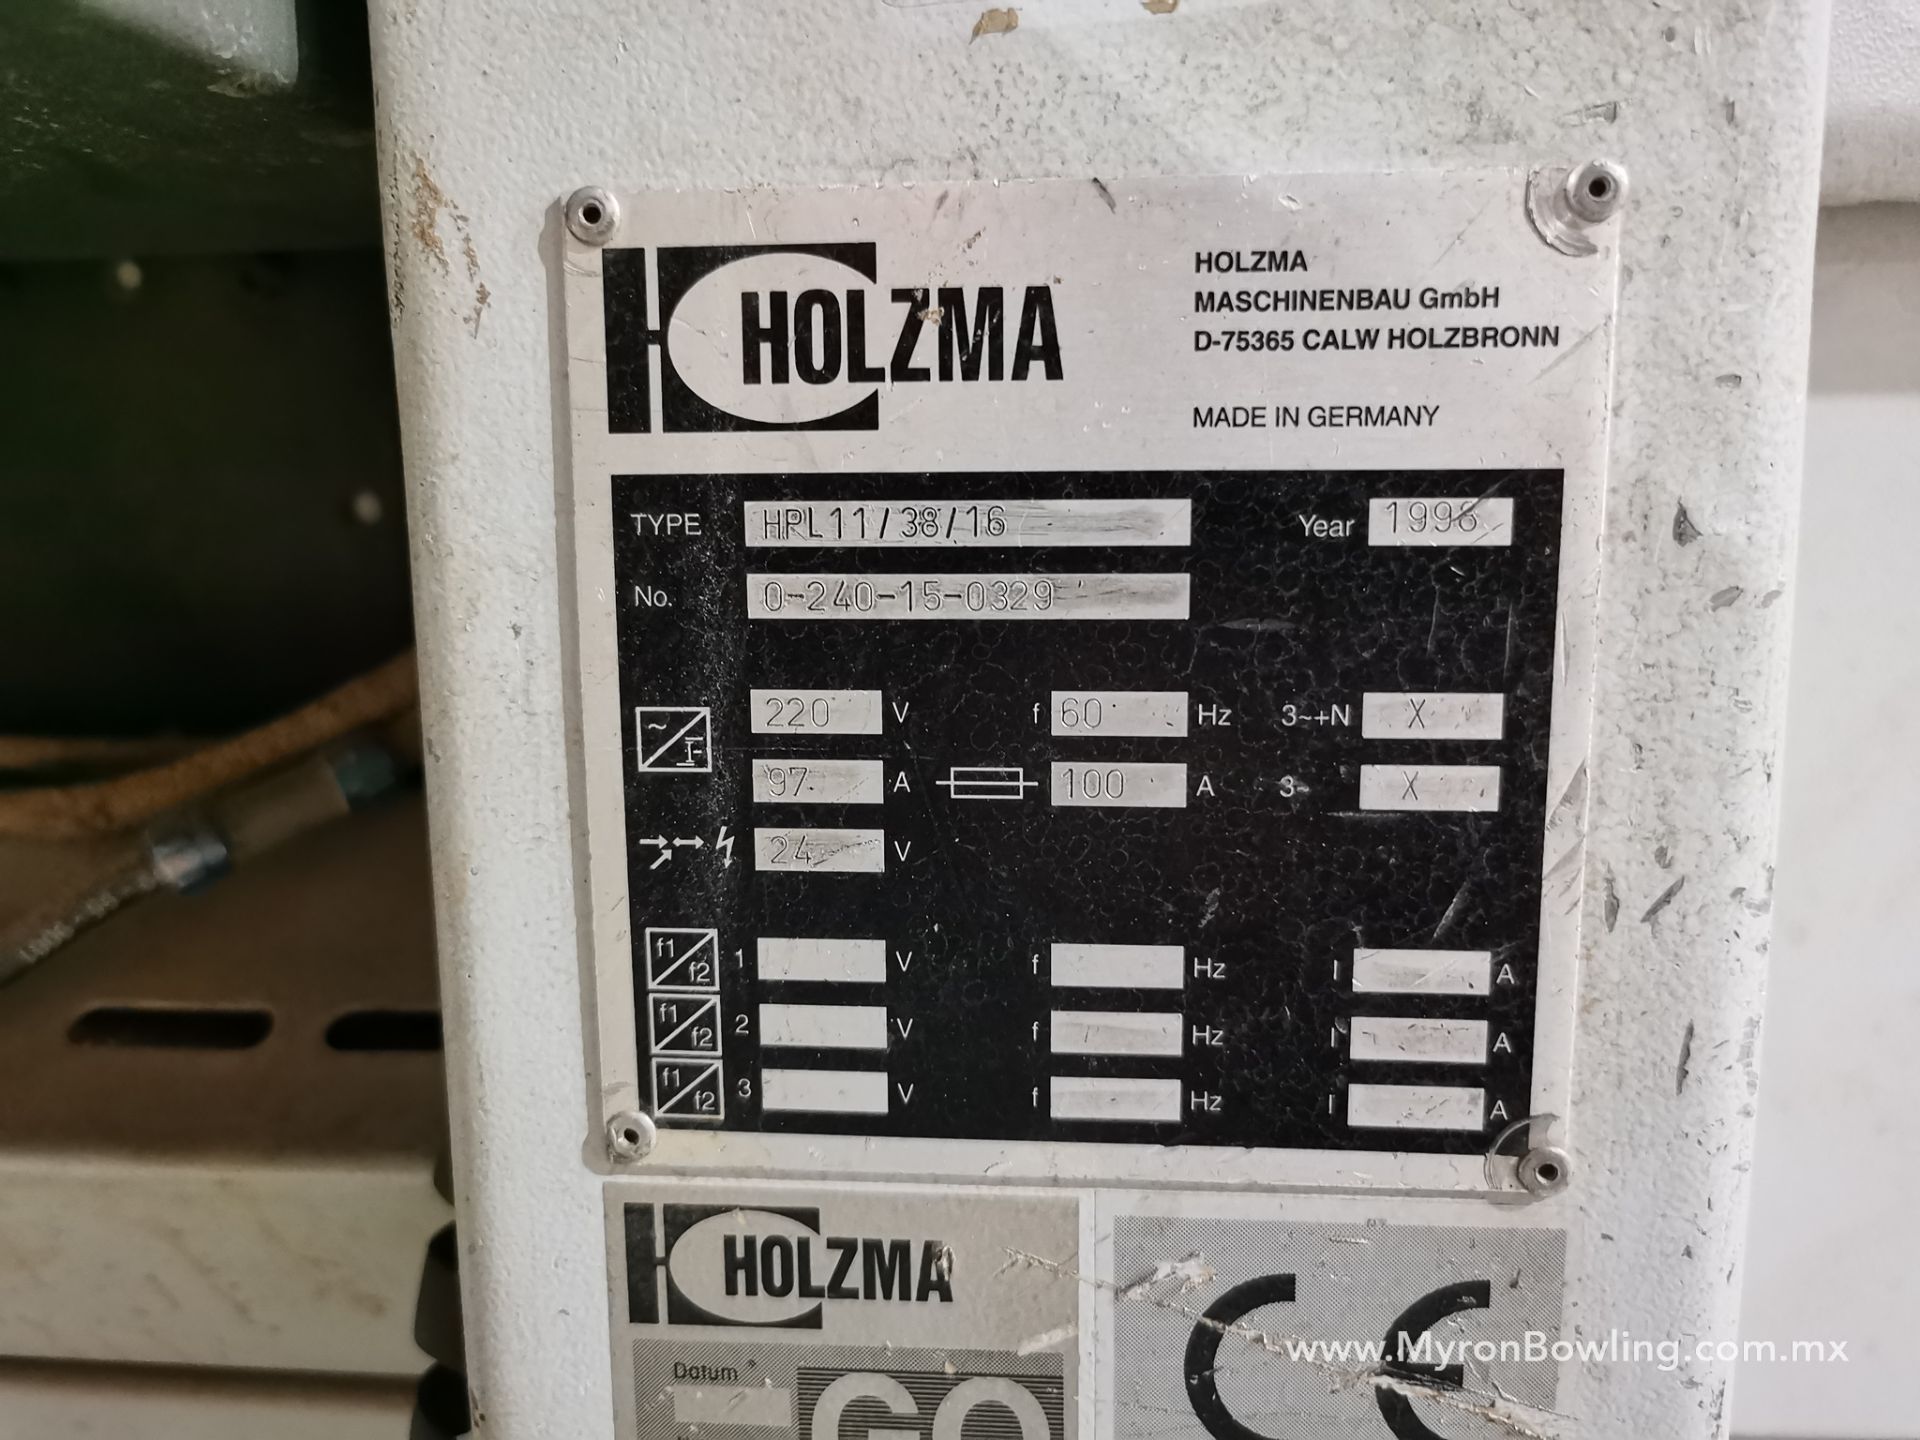 Holzma Gray Saw Machine / Gray Holzma - Infeed, Model 'HPL11/38/16, S/N 0-240-15-0329, Year 1998 - Image 25 of 26